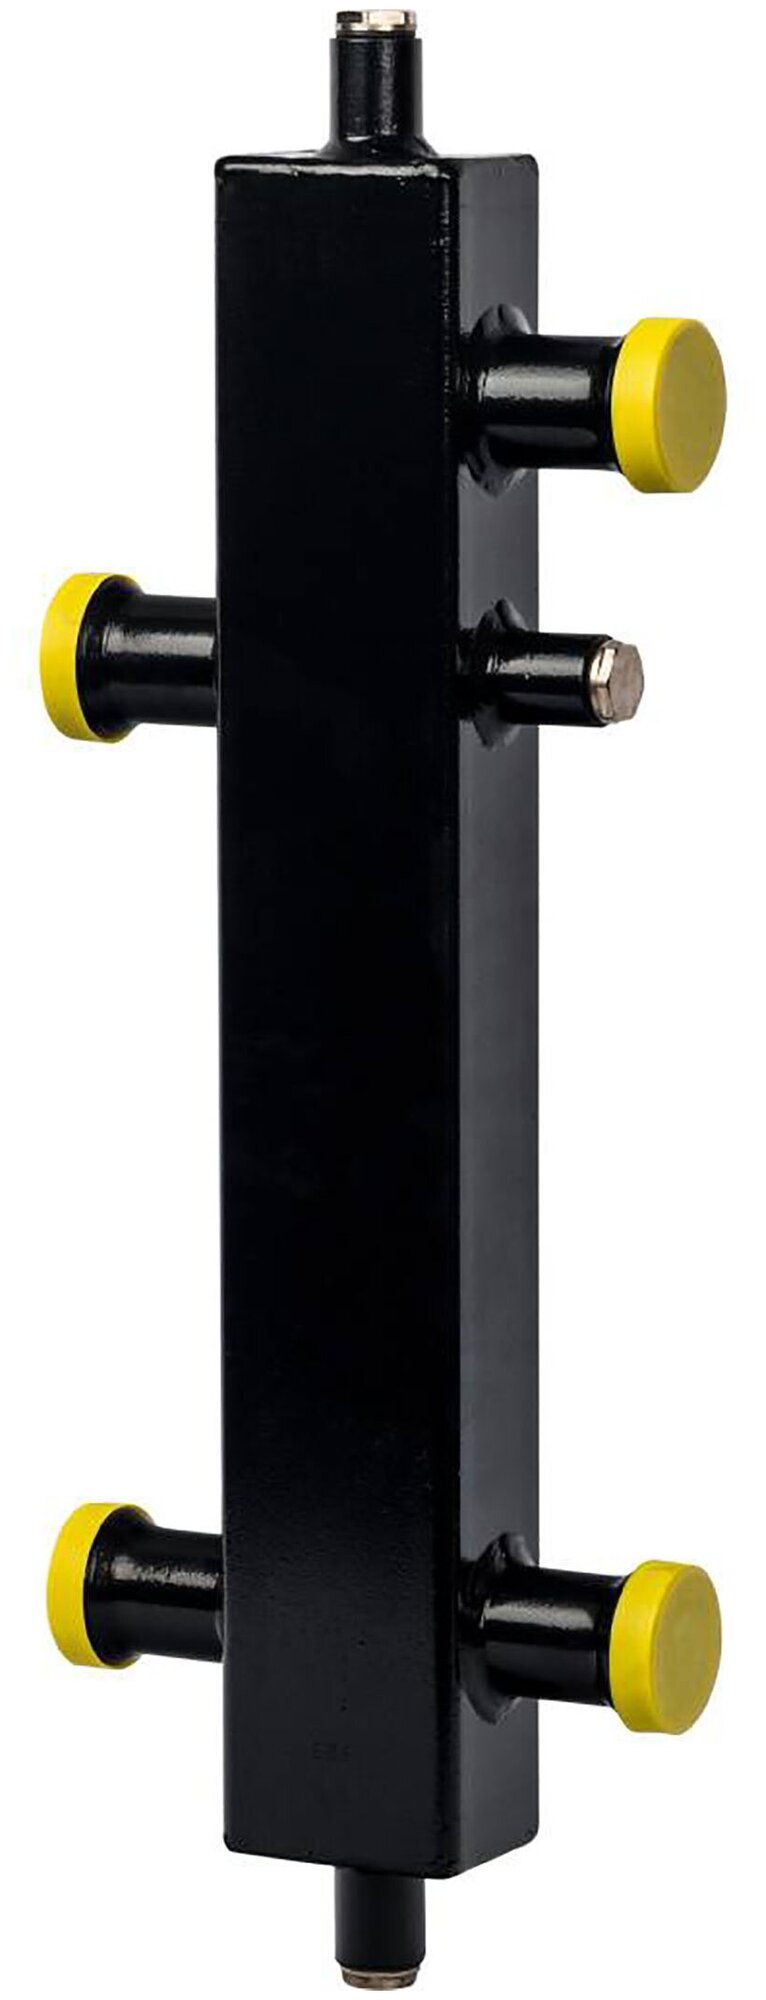 Разделитель гидравлический (гидравлическая стрелка) Stout , 5 м3/час - фото №5